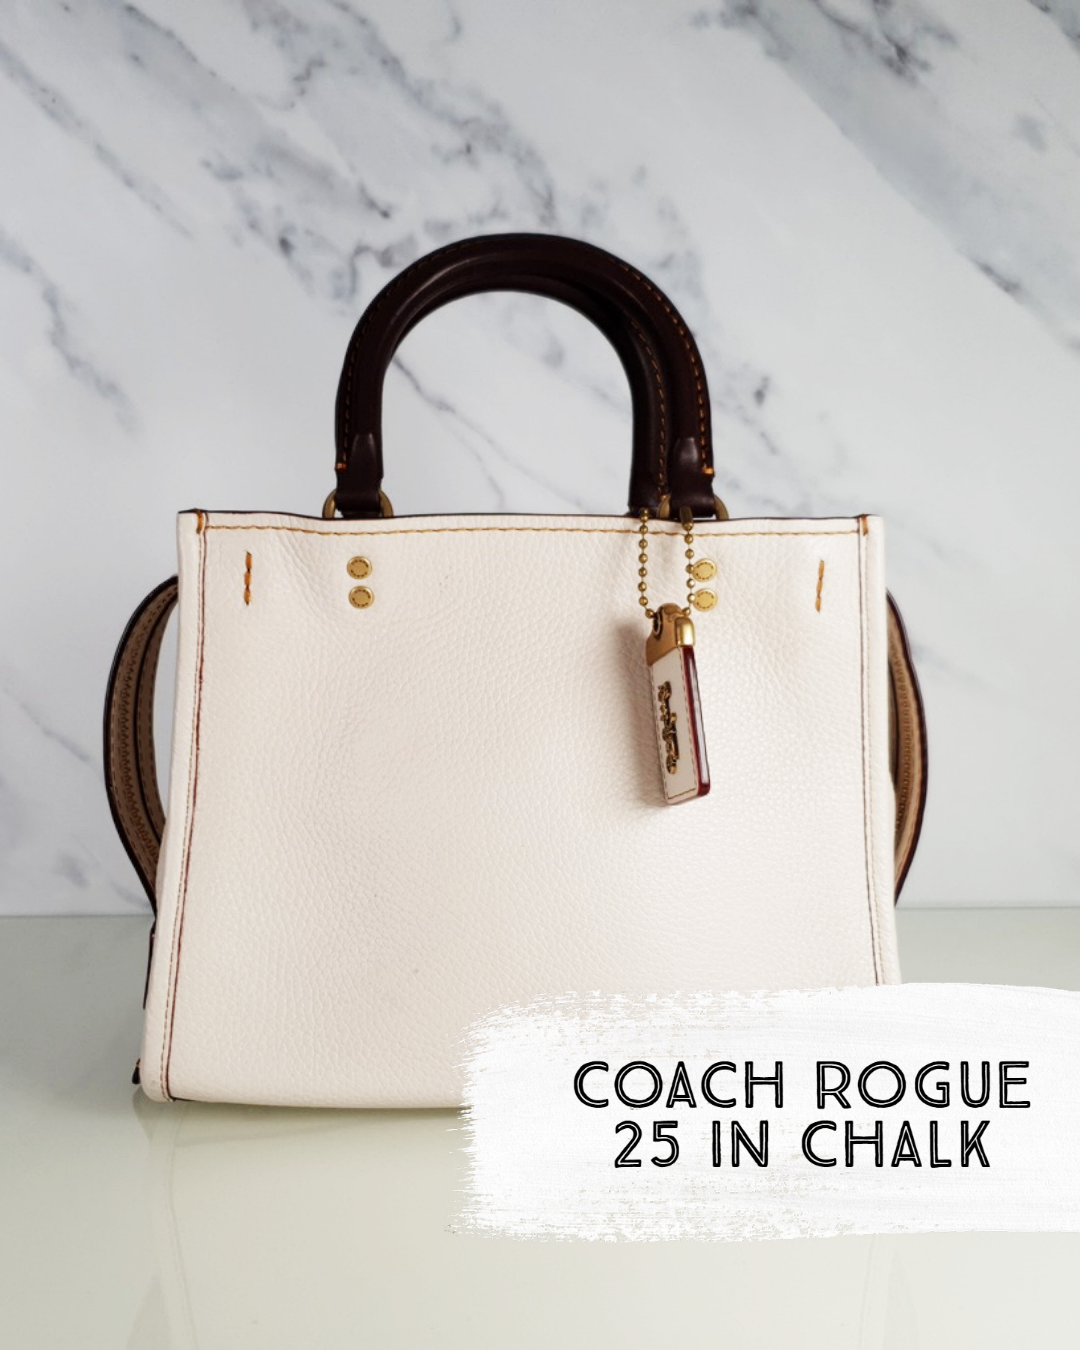 Coach rogue 25 in chalk pebble leather handbag